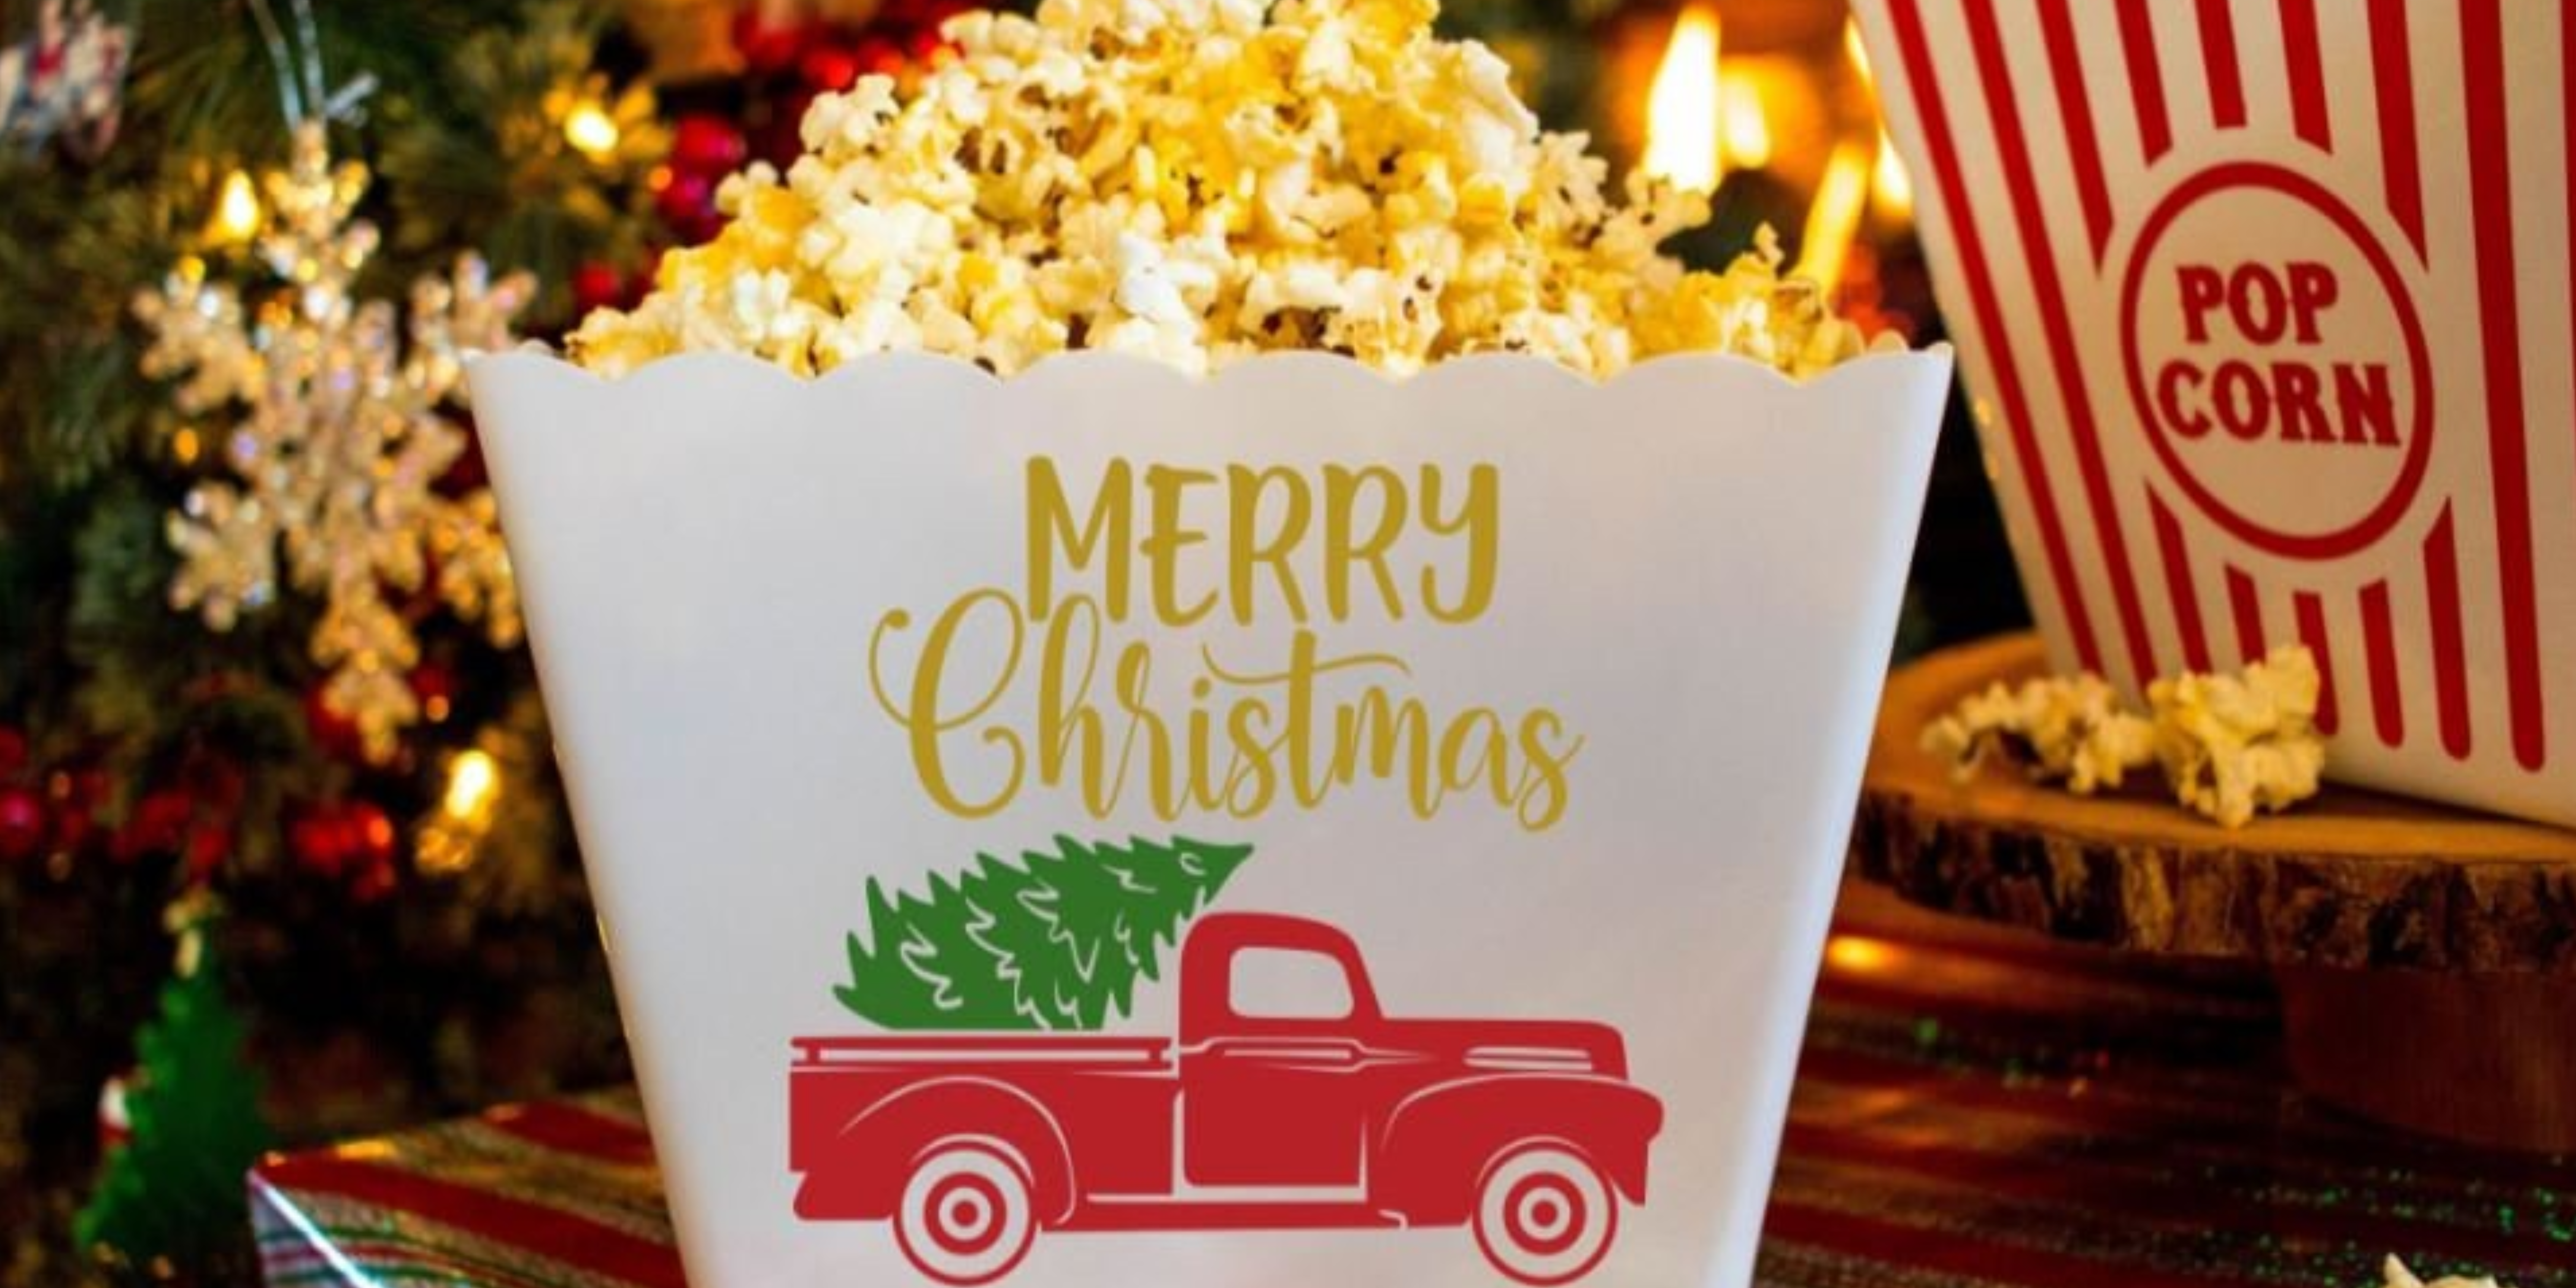 Christmas themed popcorn